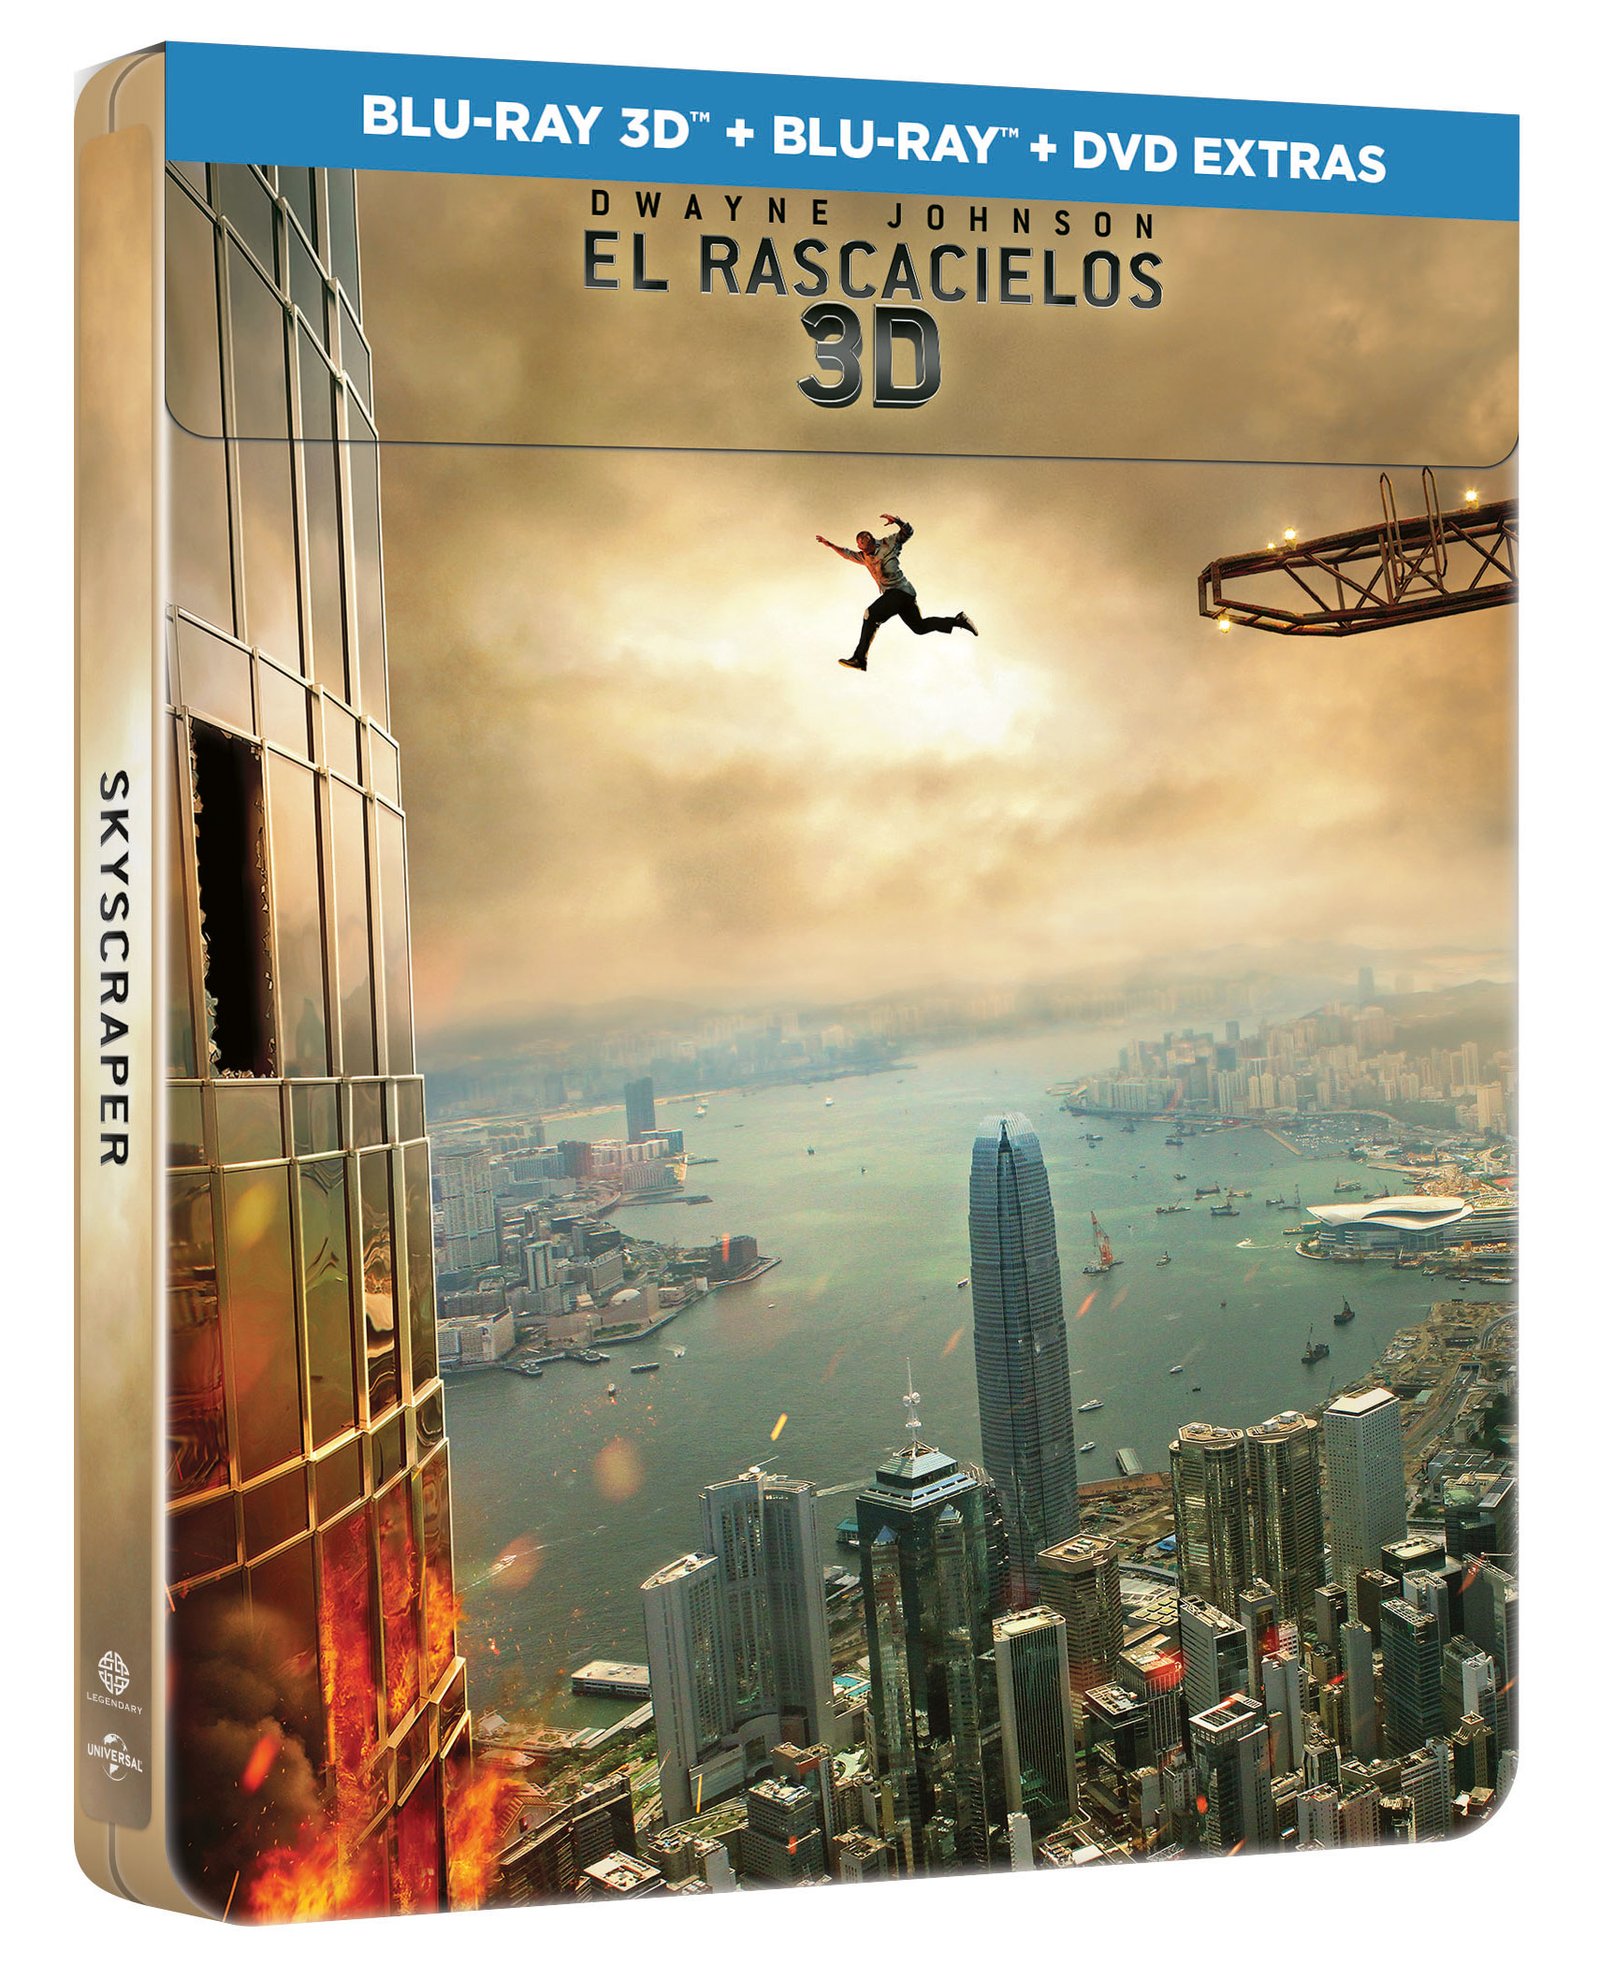 El Rascacielos - Steelbook 3D + Blu-ray